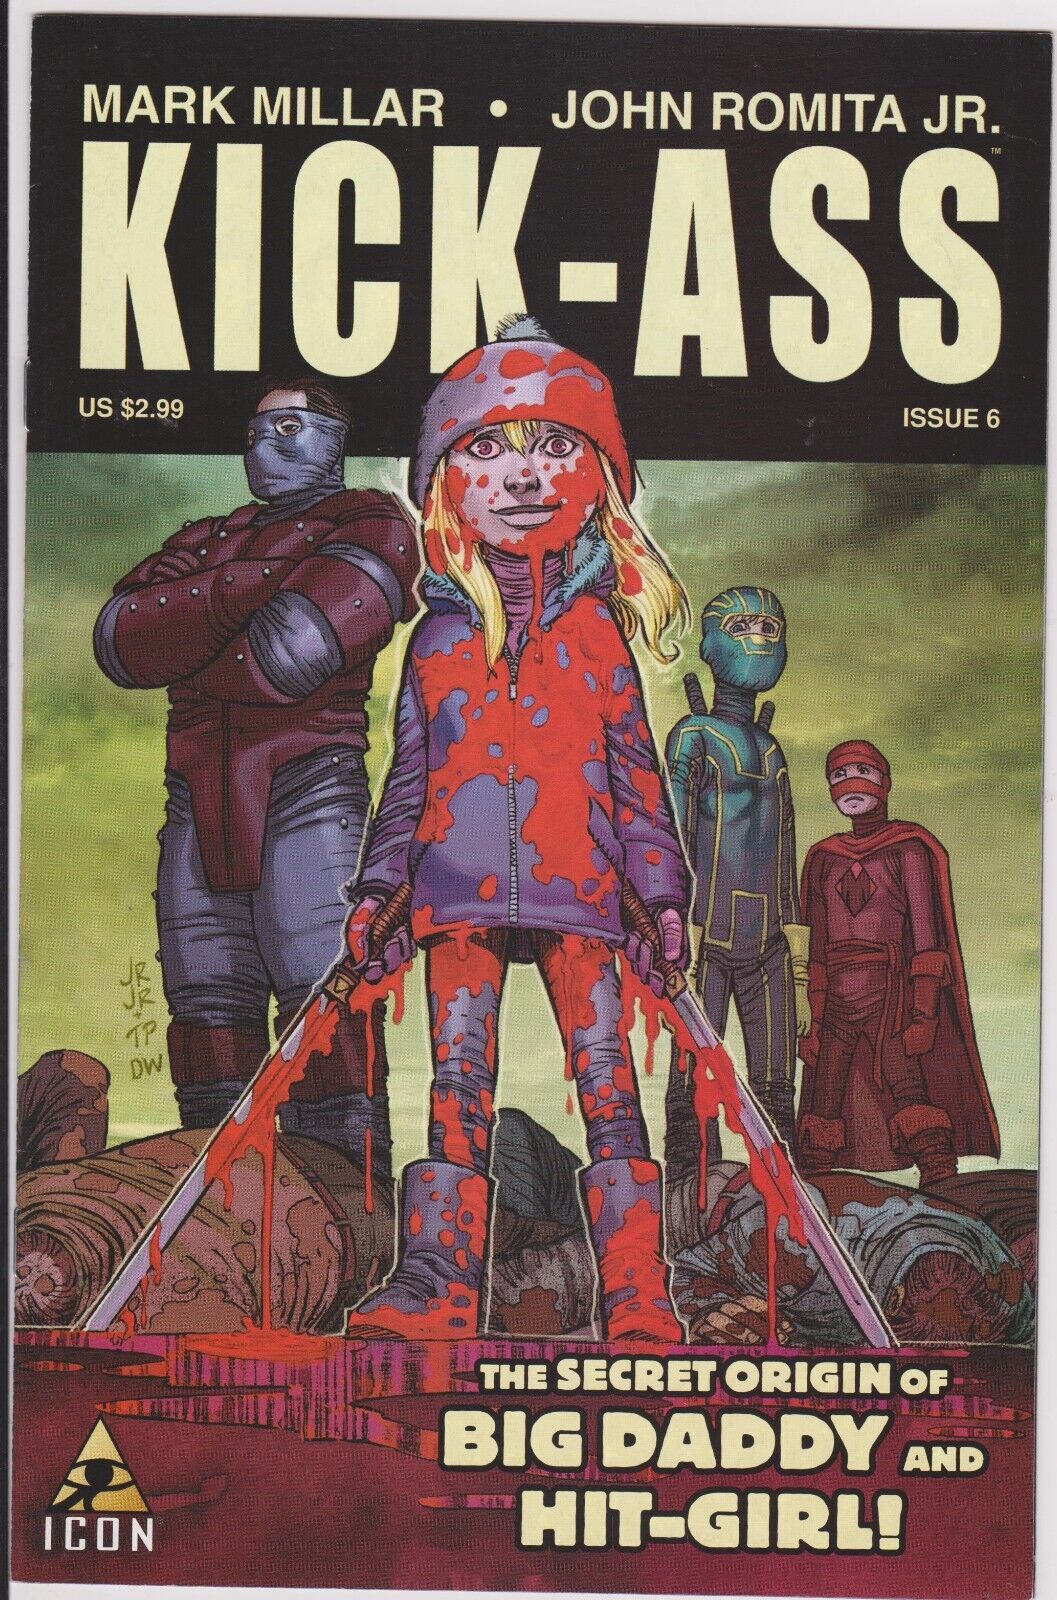 Kick-Ass Issue #6 Comic Book. Vol 1. Mark Millar. John Romita Jr. Icon 2009